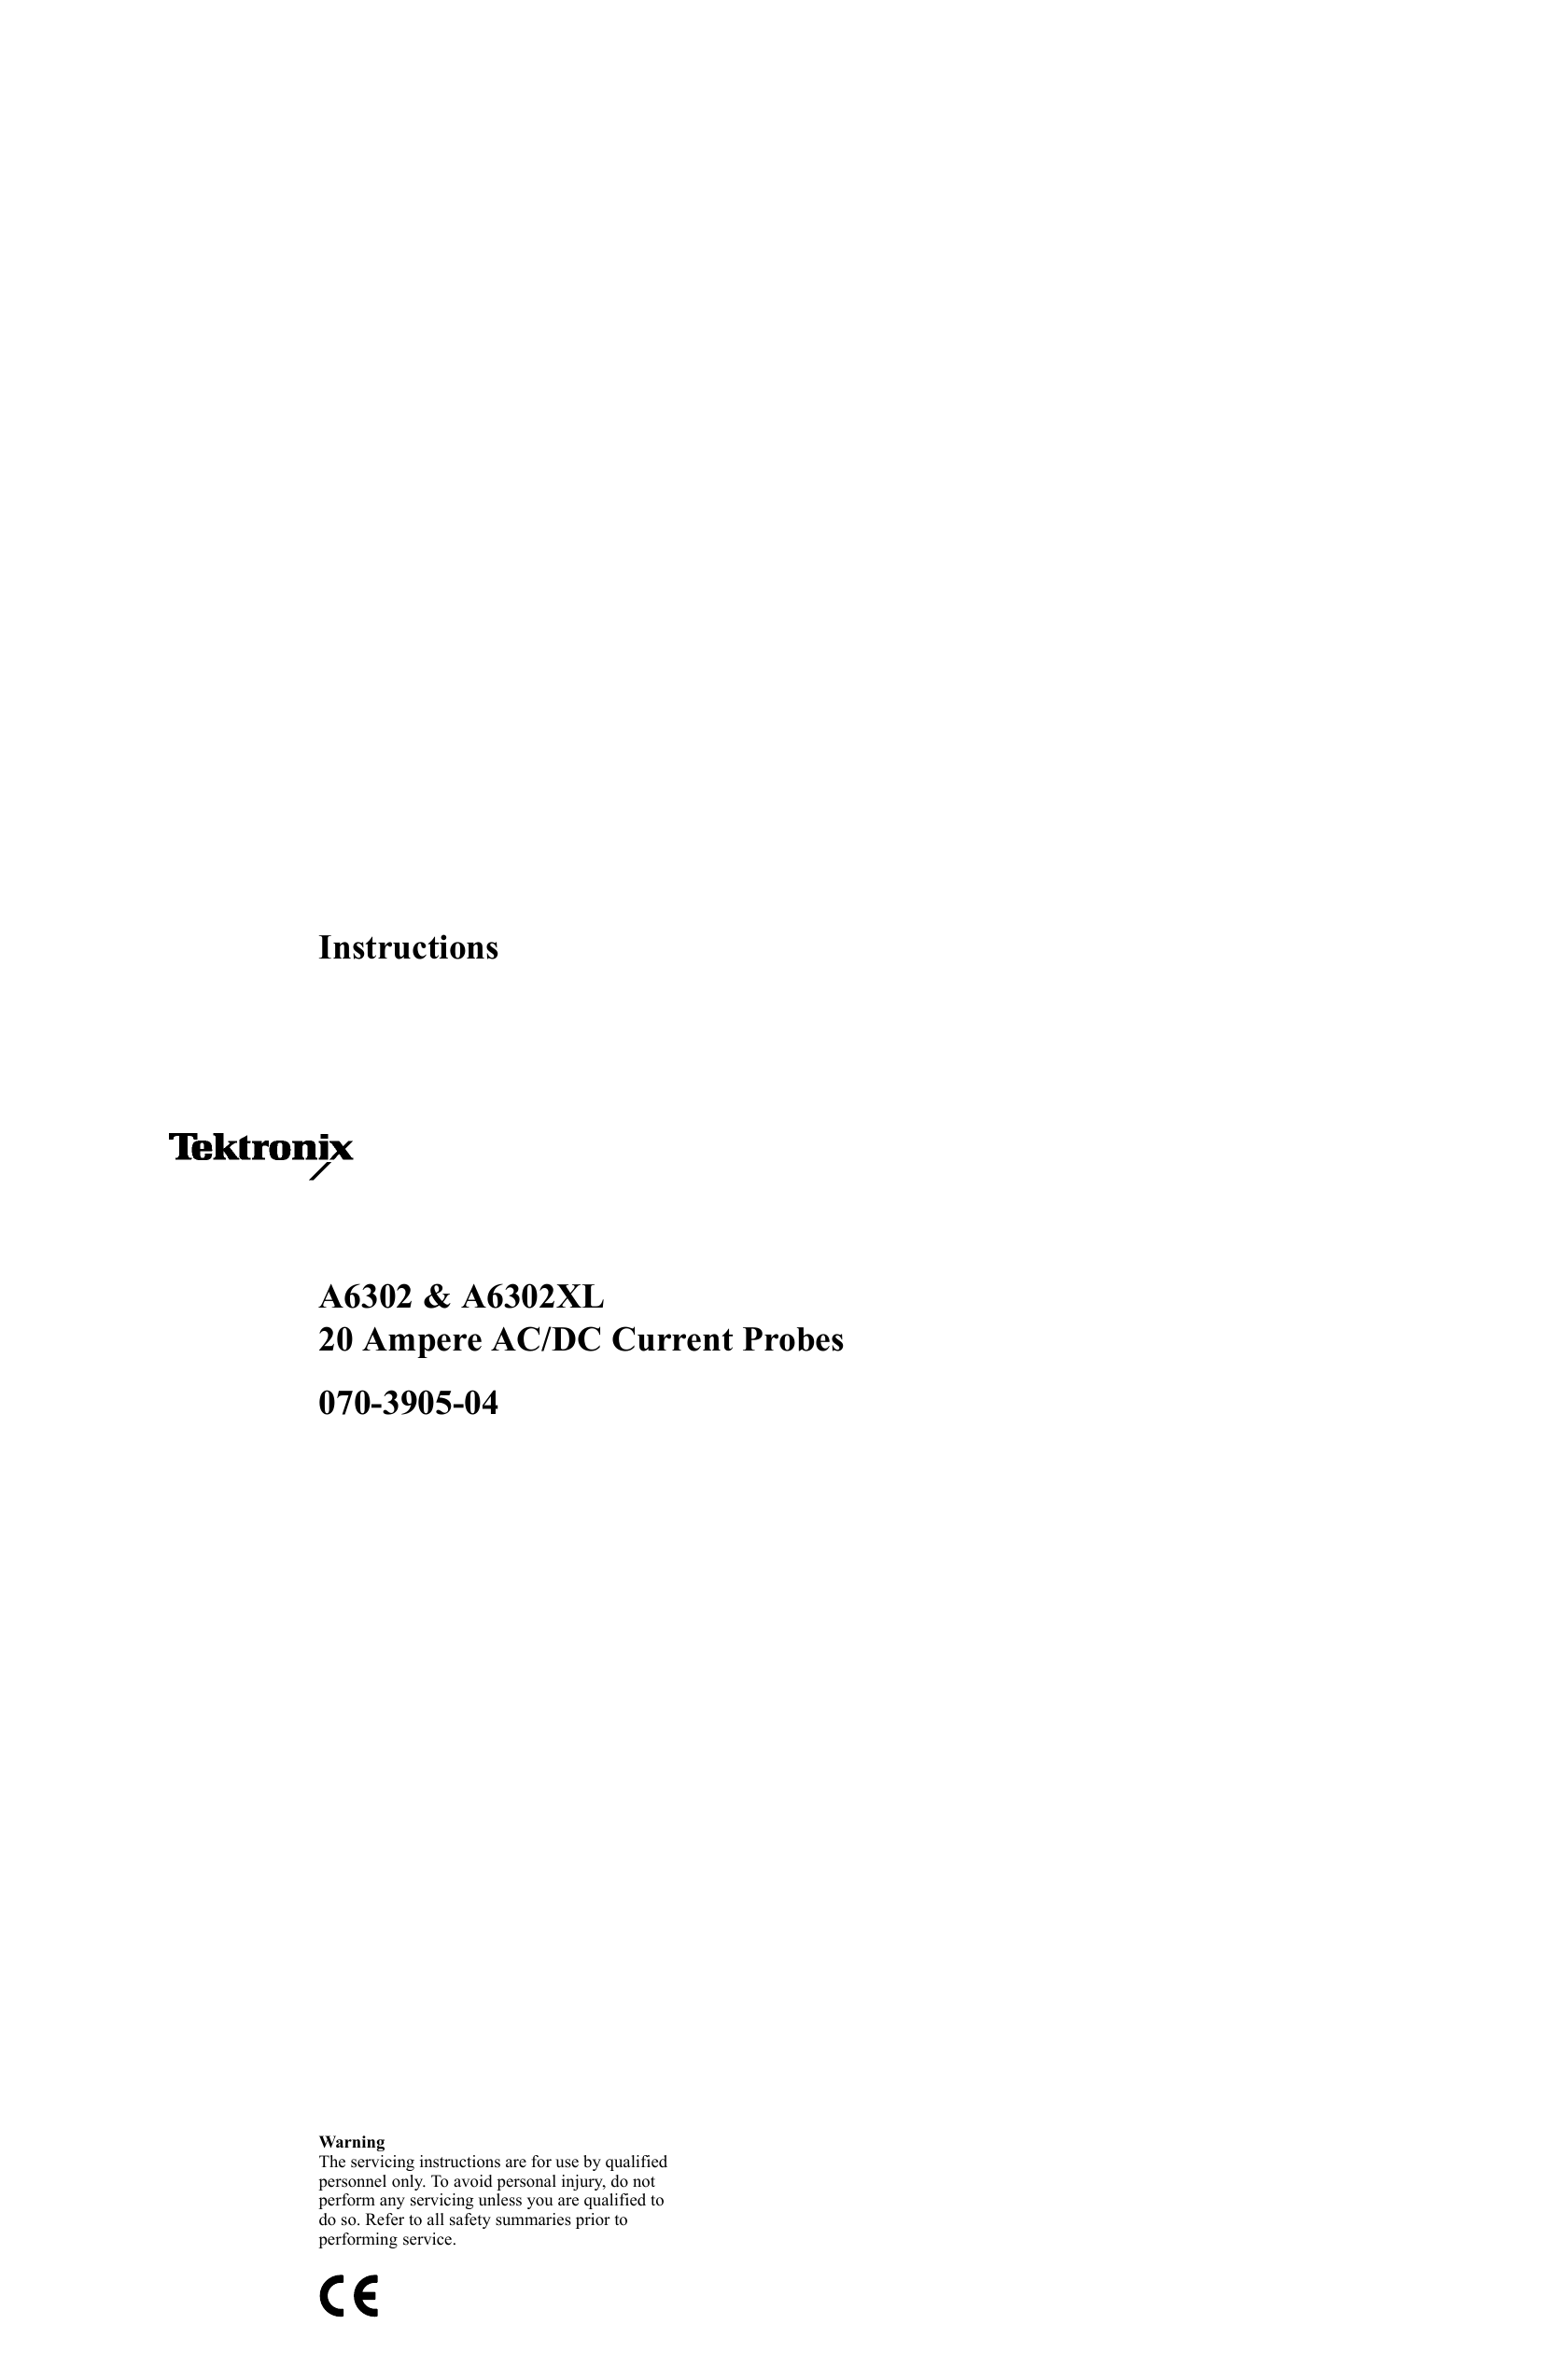 Tektronix P6101B 15MHz 1x passive probe 070-7819-07 new 